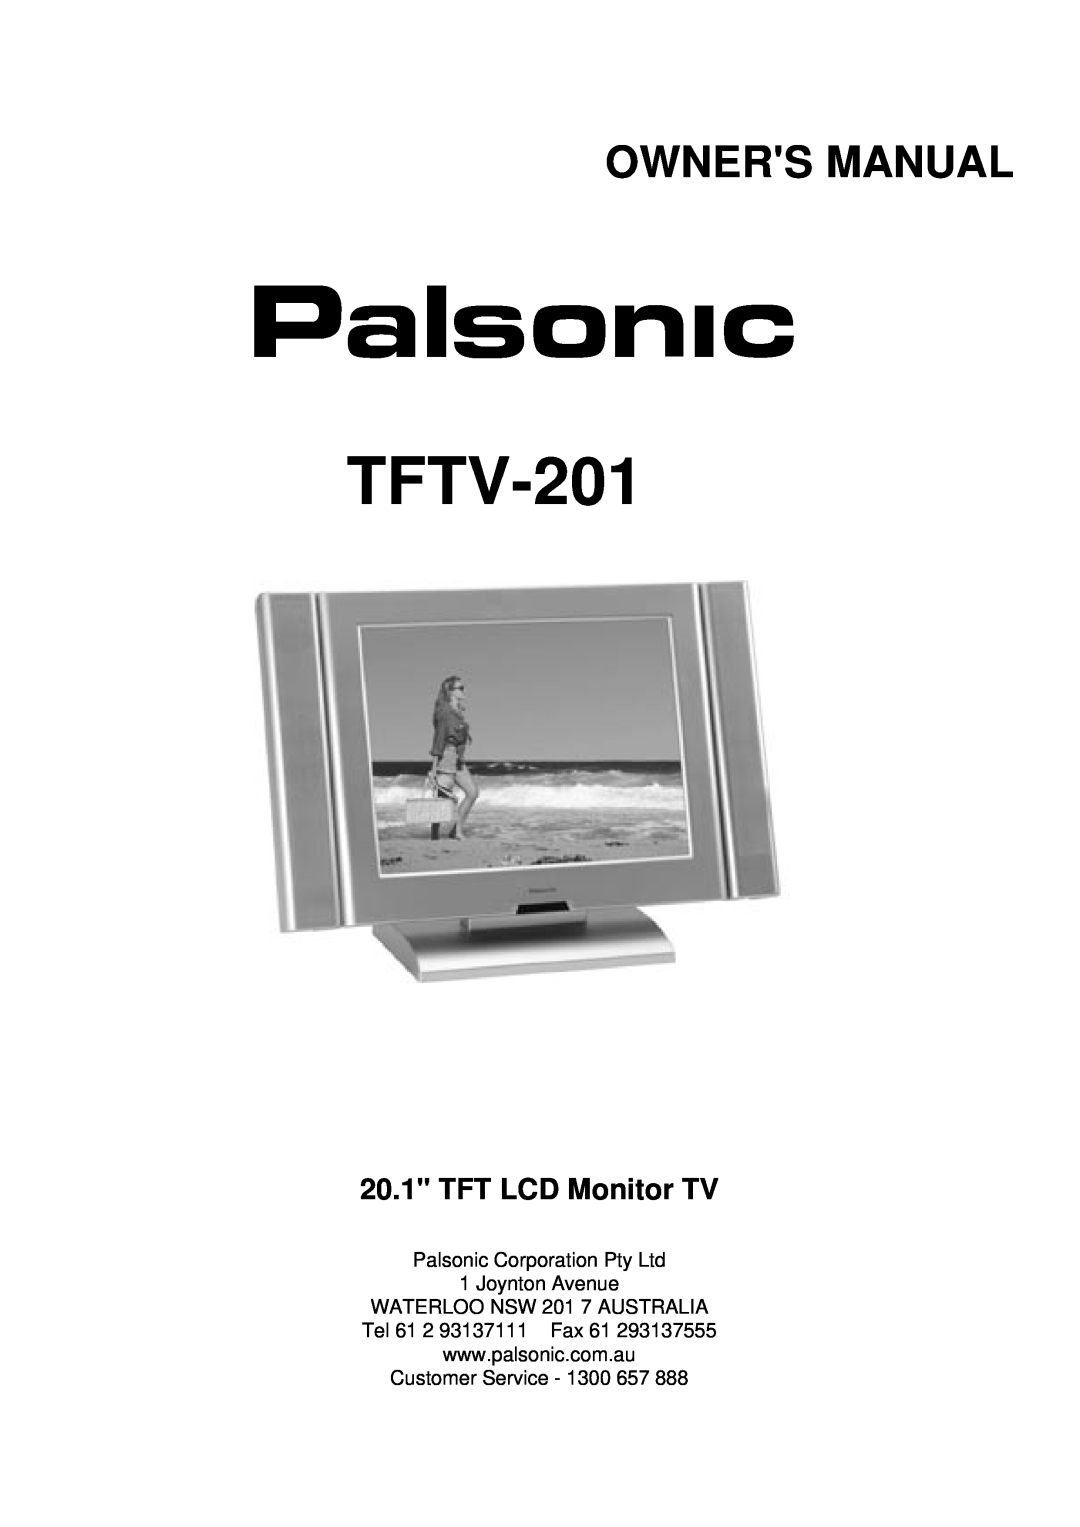 Palsonic TFTV-201 owner manual Owners Manual, TFT LCD Monitor TV 